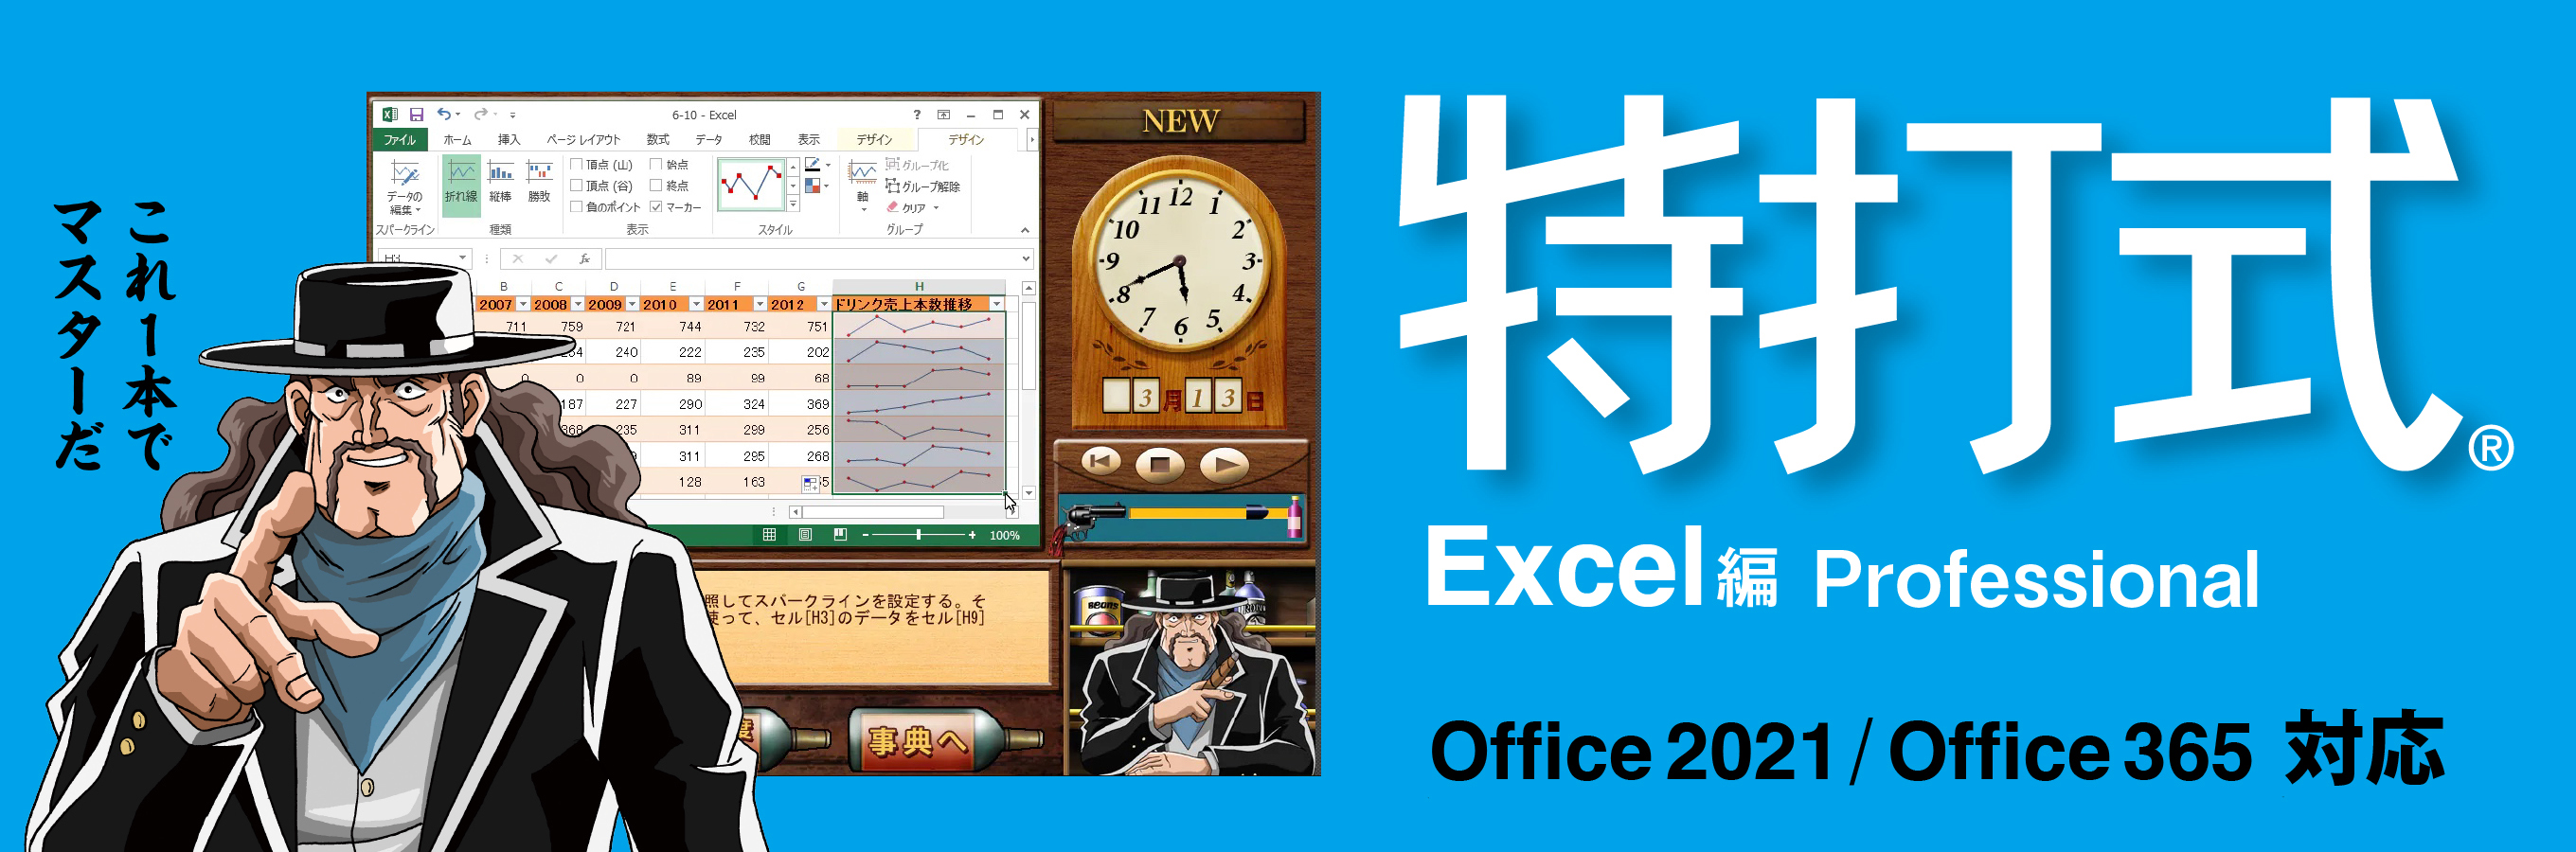 最新版Office 2021対応「特打式 Excel編 Professional 」